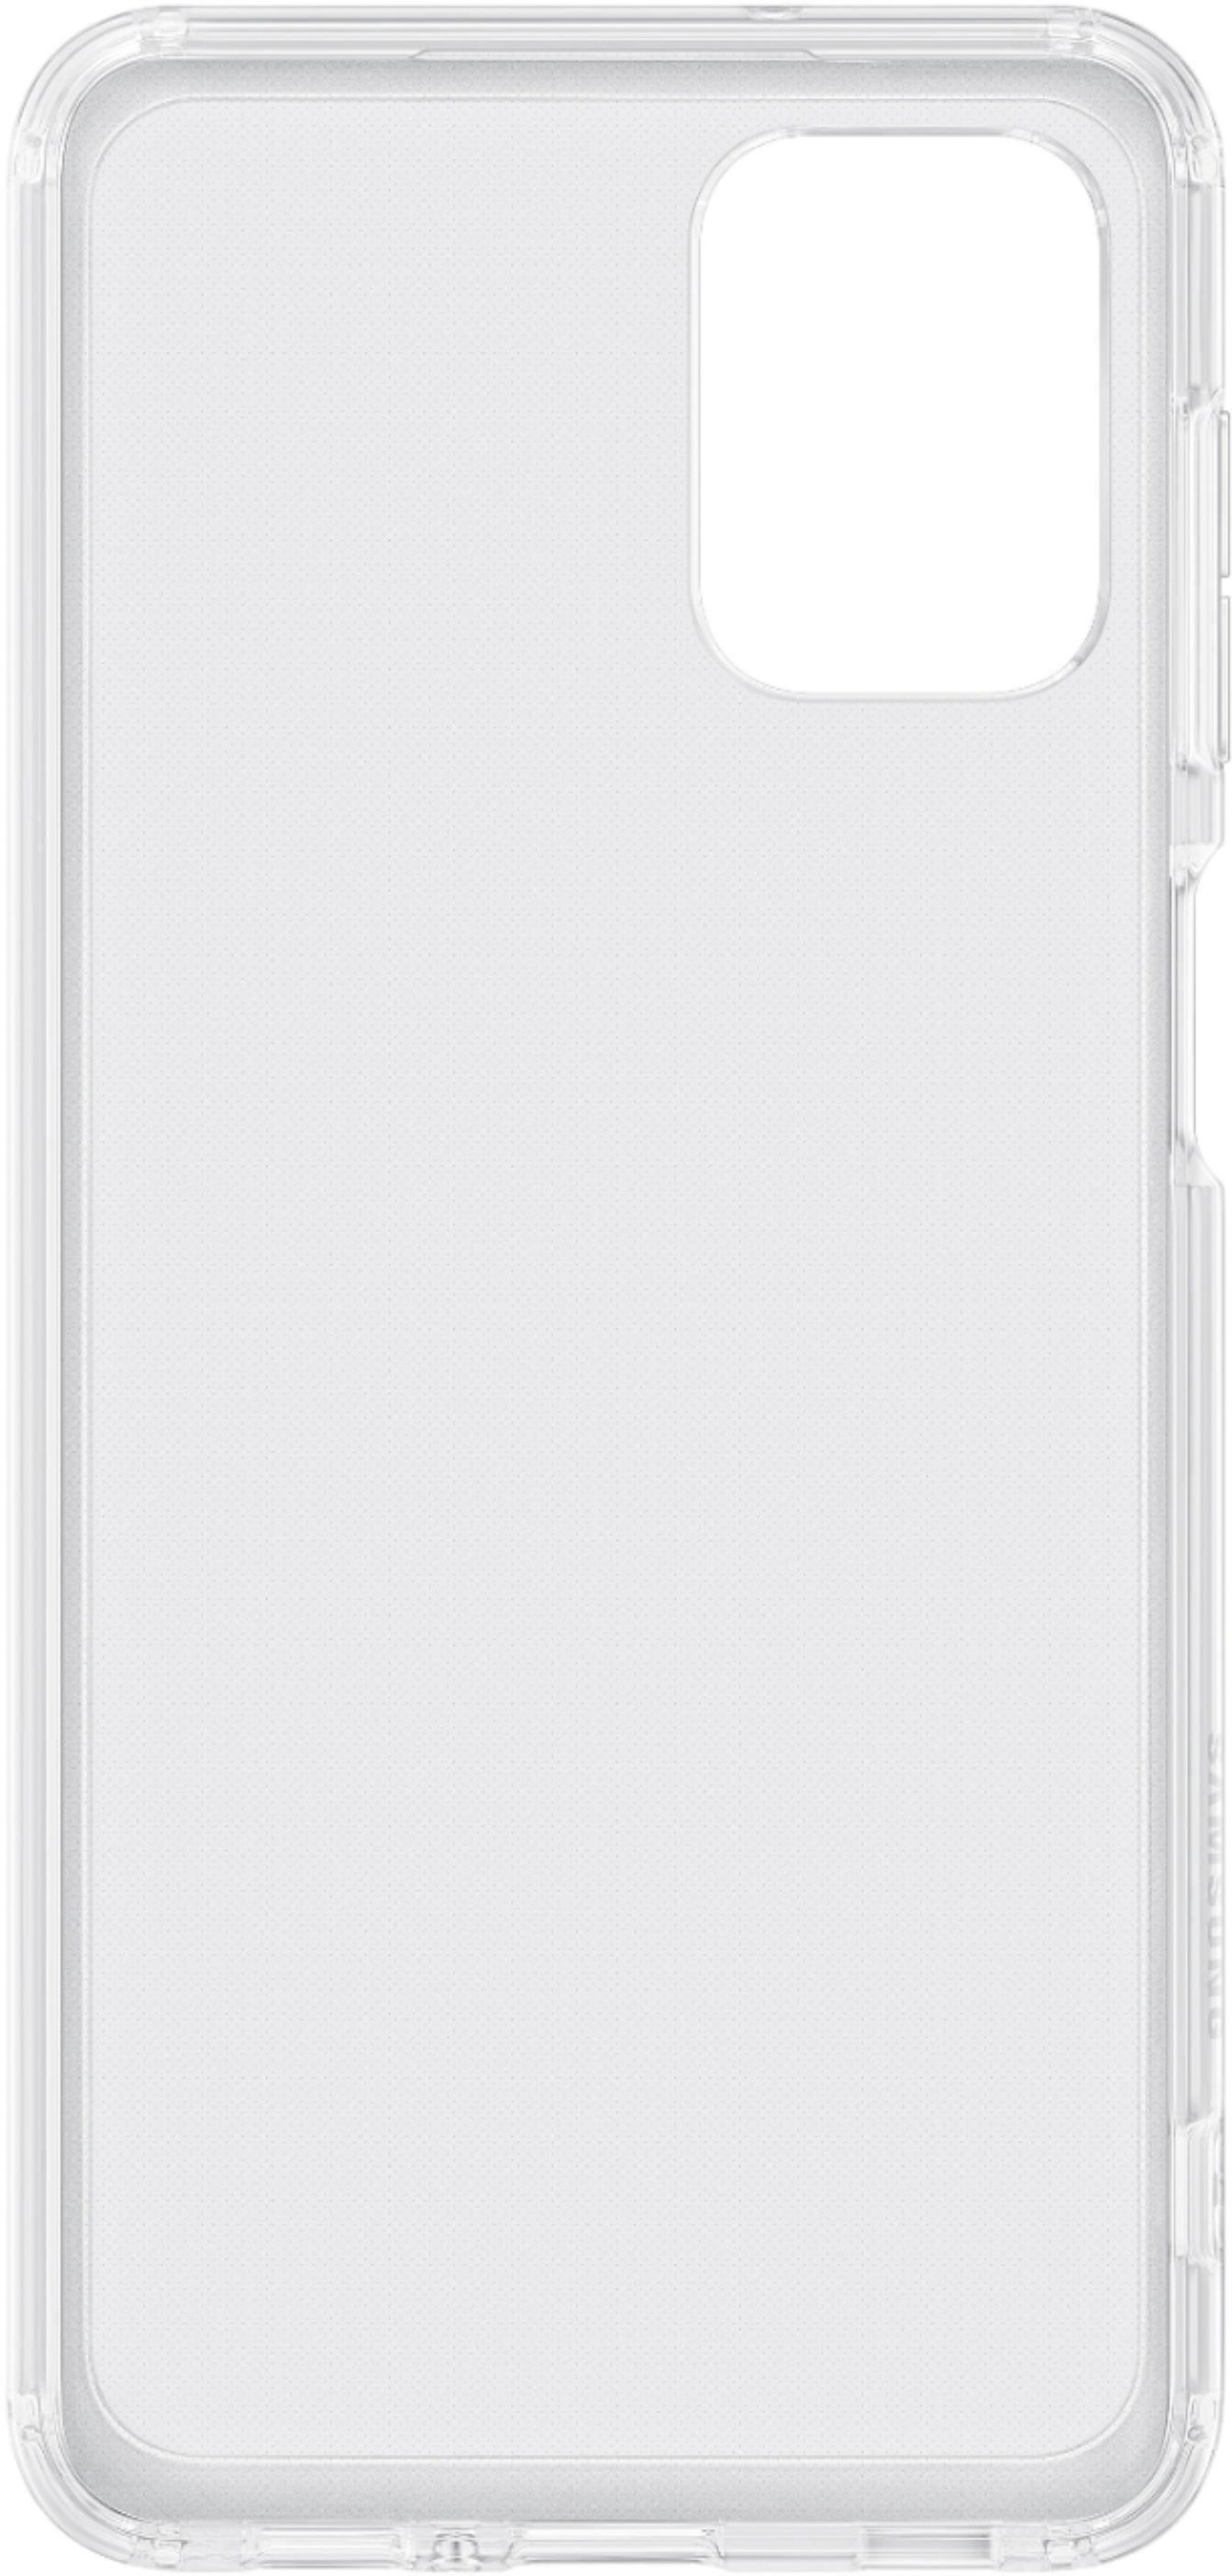 Satin White - Marble Samsung Galaxy A12 Case